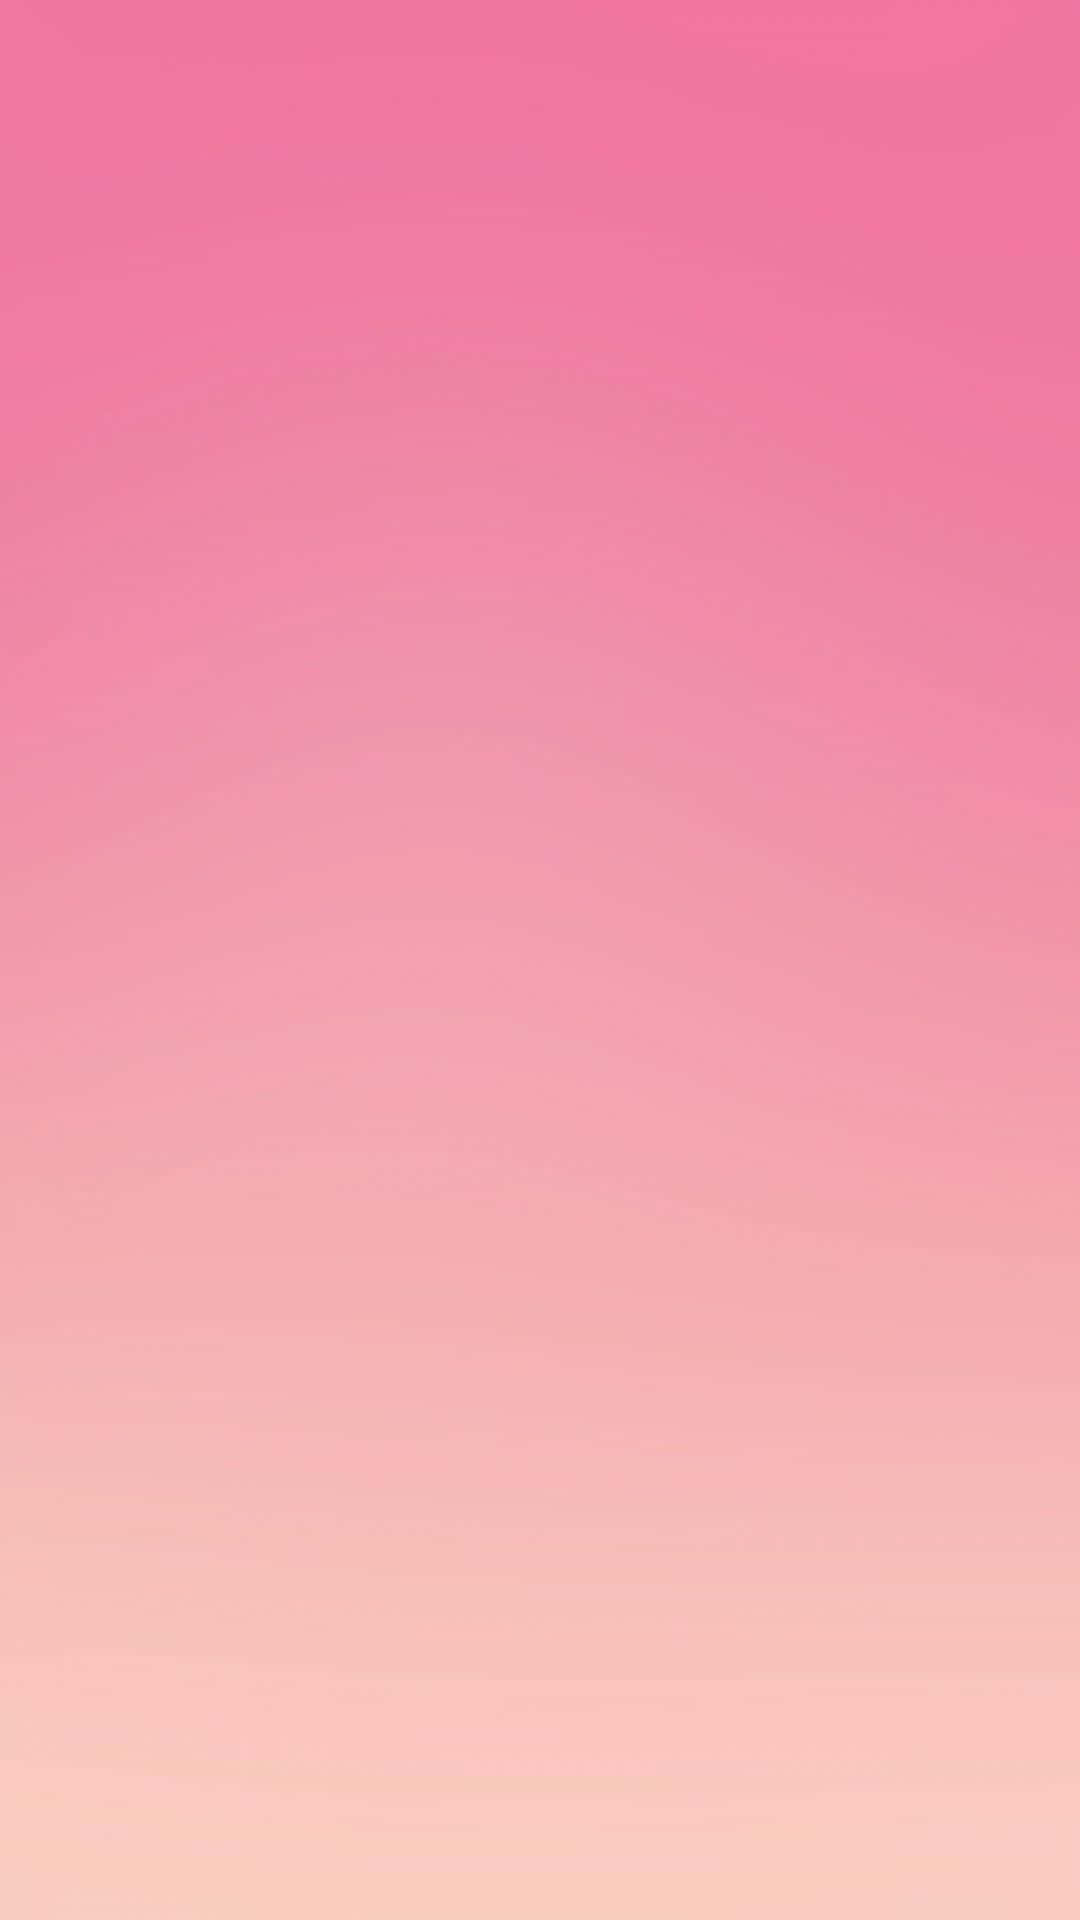 1080x1920 Light Pink Solid Color Background